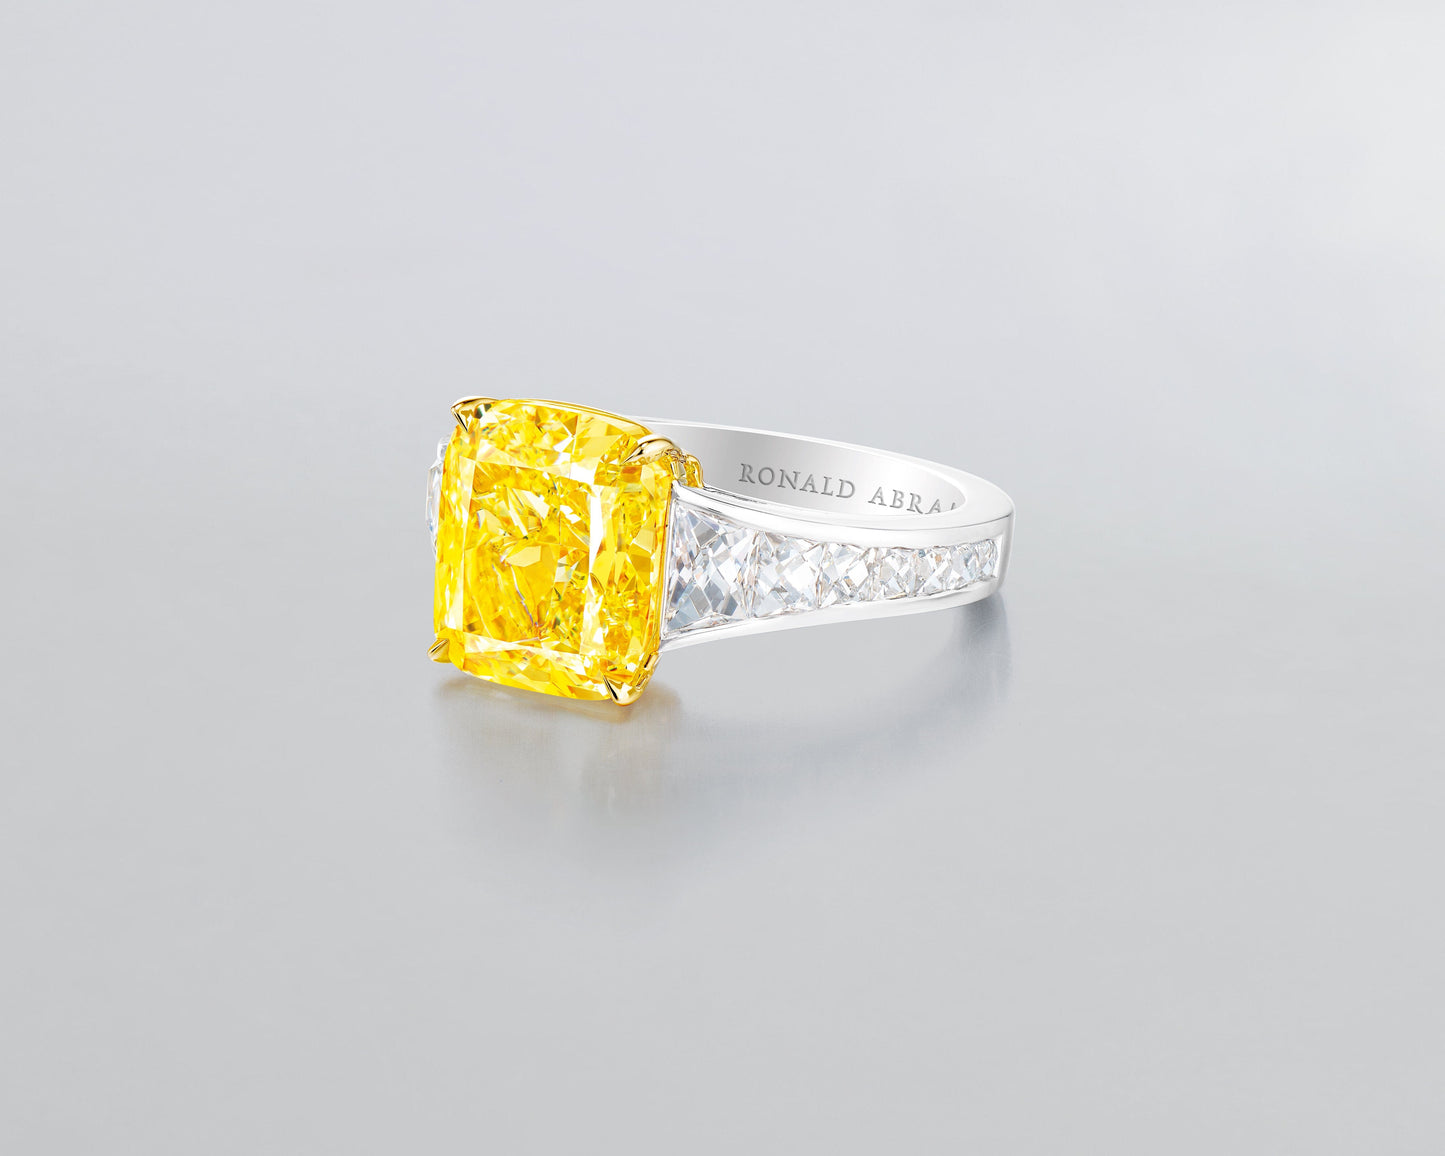 5.02 carat Cushion Cut Fancy Intense Yellow Diamond Ring